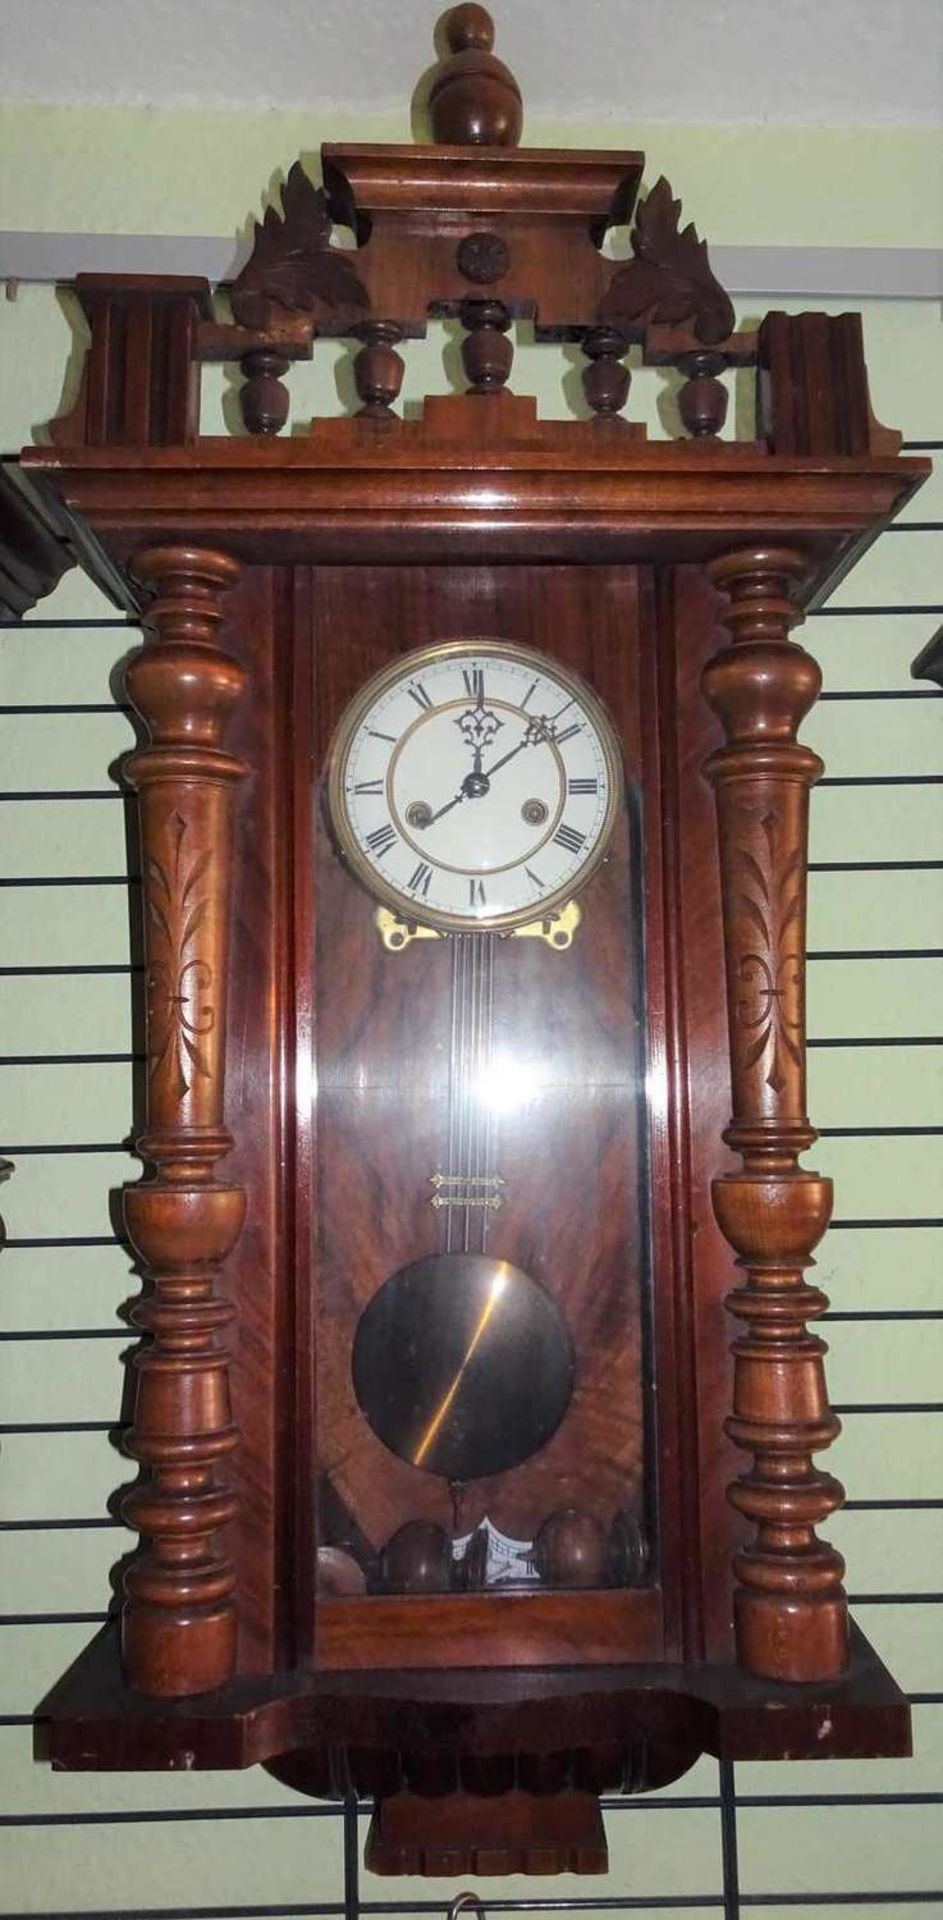 Wilhelminian style wall clock, good condition, dimensions approx. 89 x 40 x 19 cm.Gründerzeit